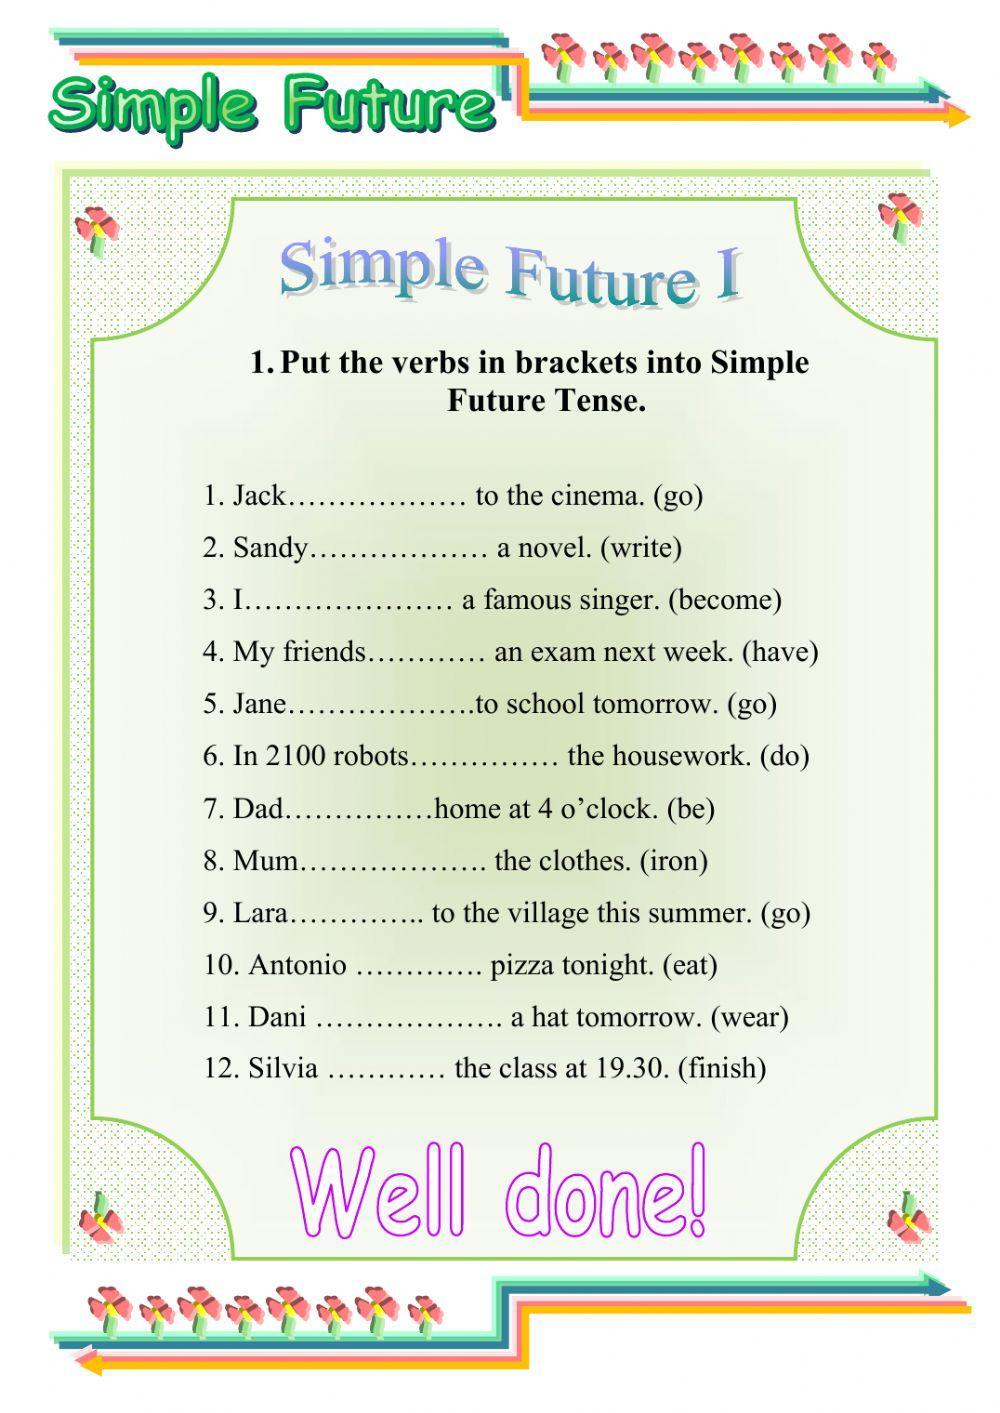 Future simple